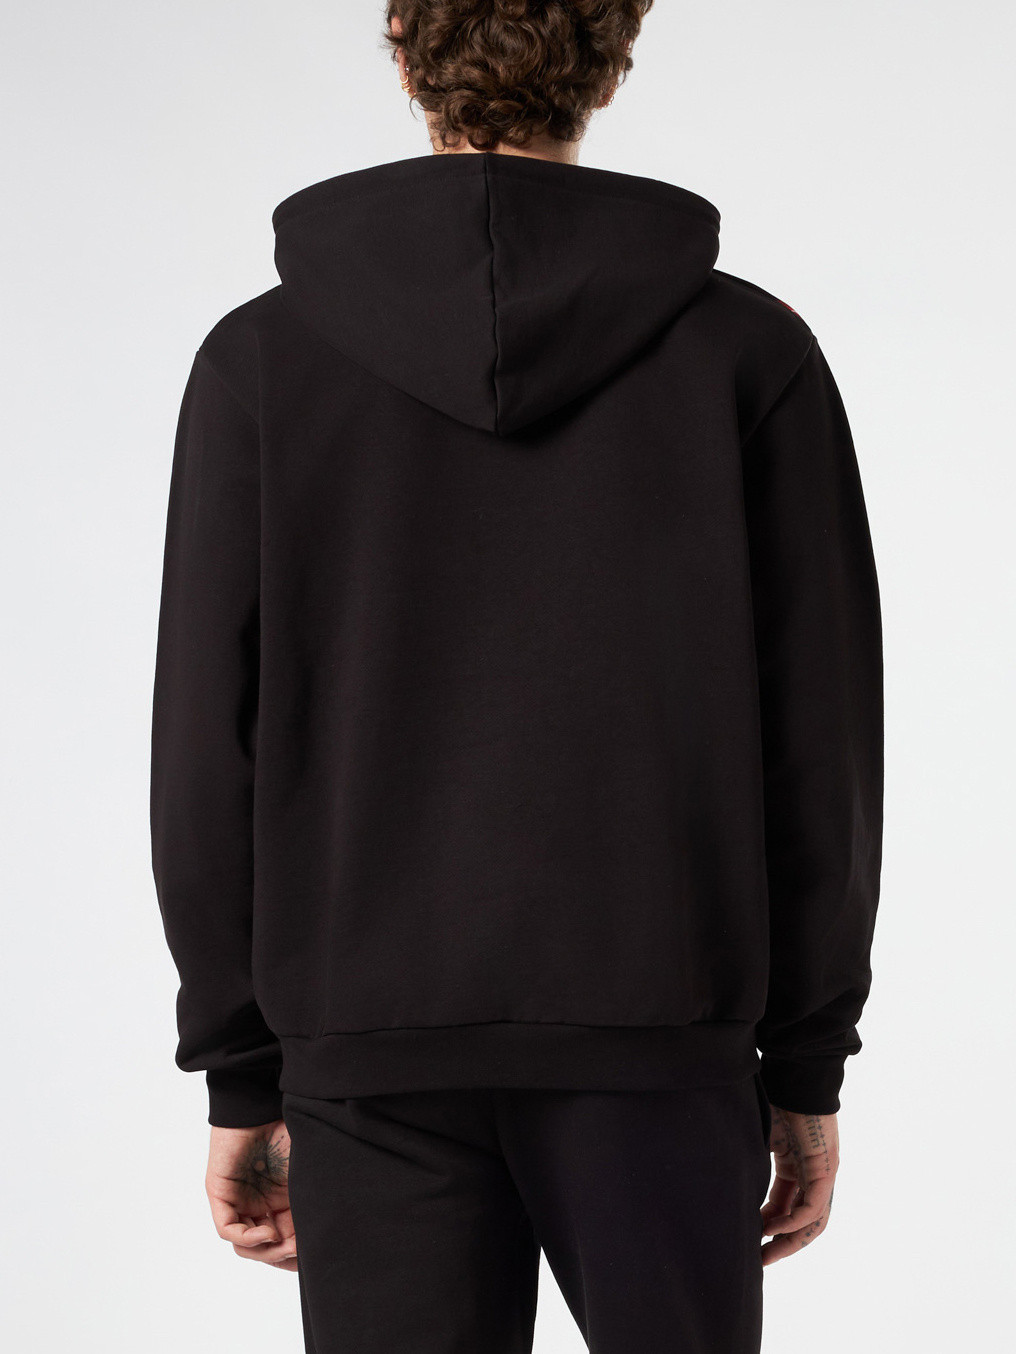 Phobia - Cotton sweatshirt with lightning print, Black, large image number 2